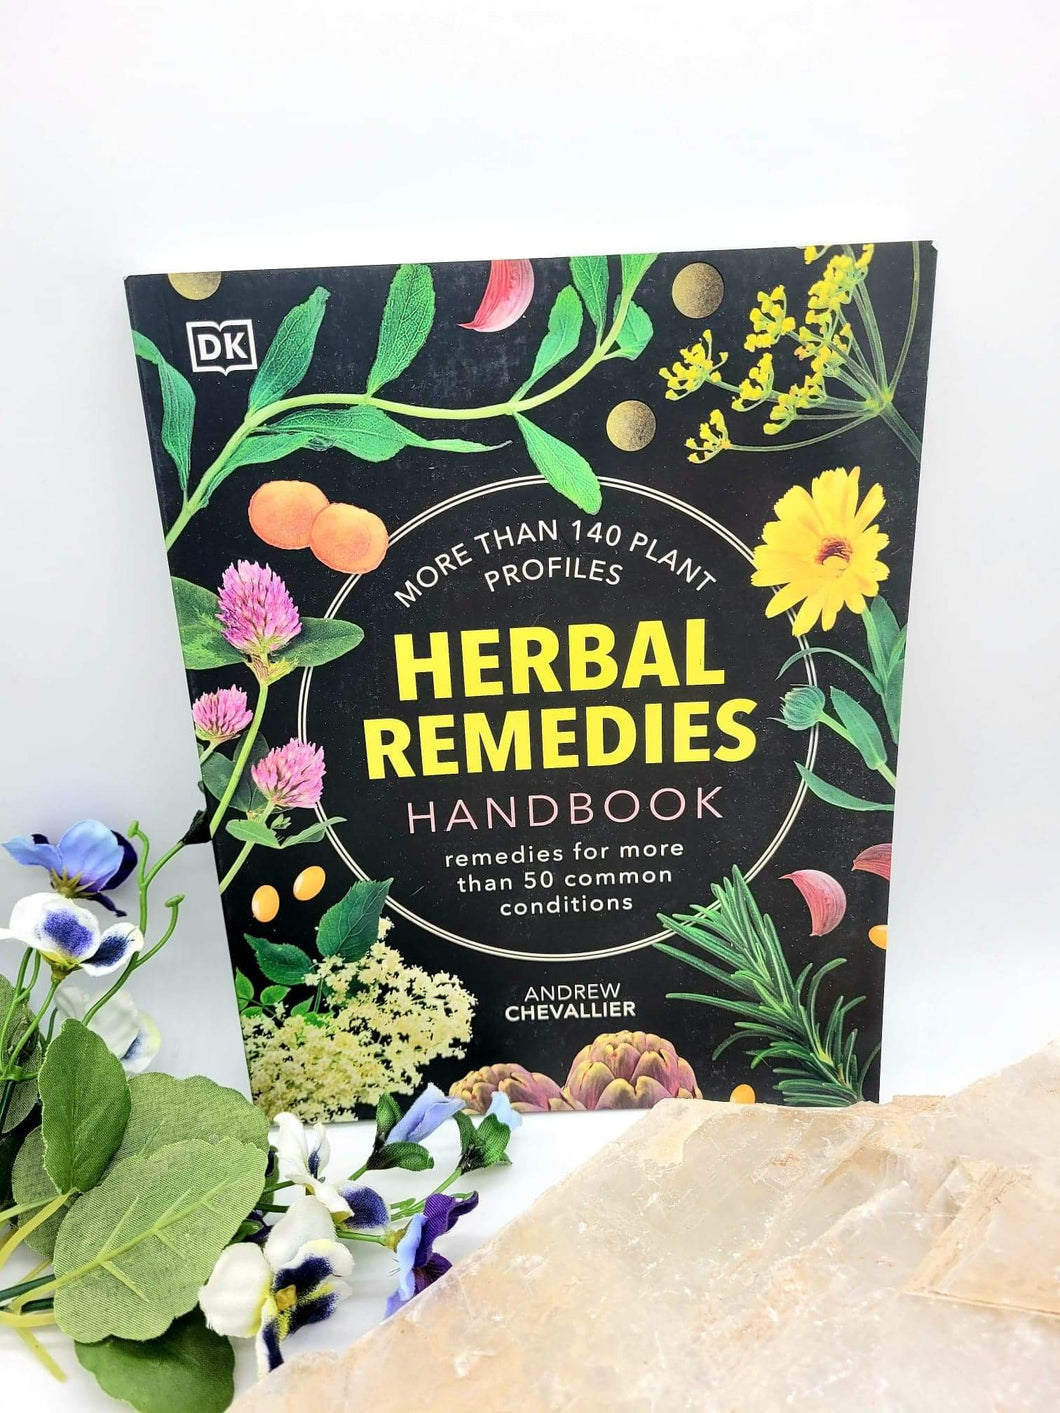 Herbal Remedies Handbook by Andrew Chevallier